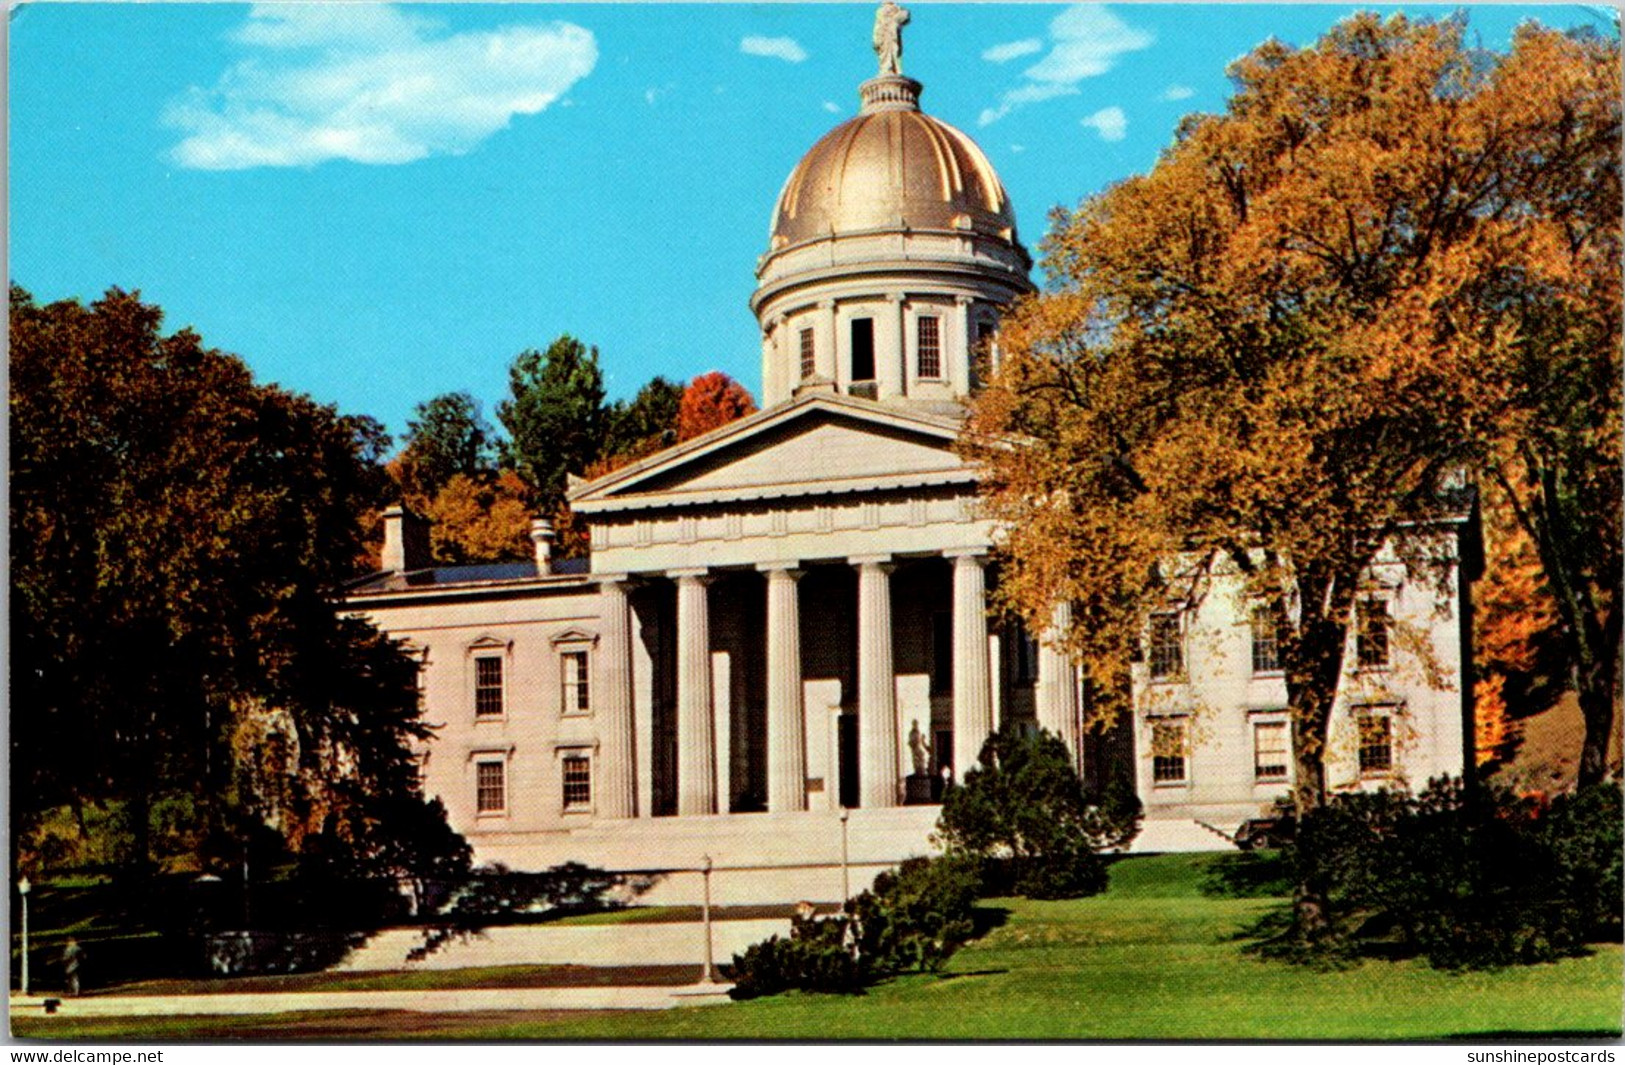 Vermont Montpelier State Capitol Building - Montpelier